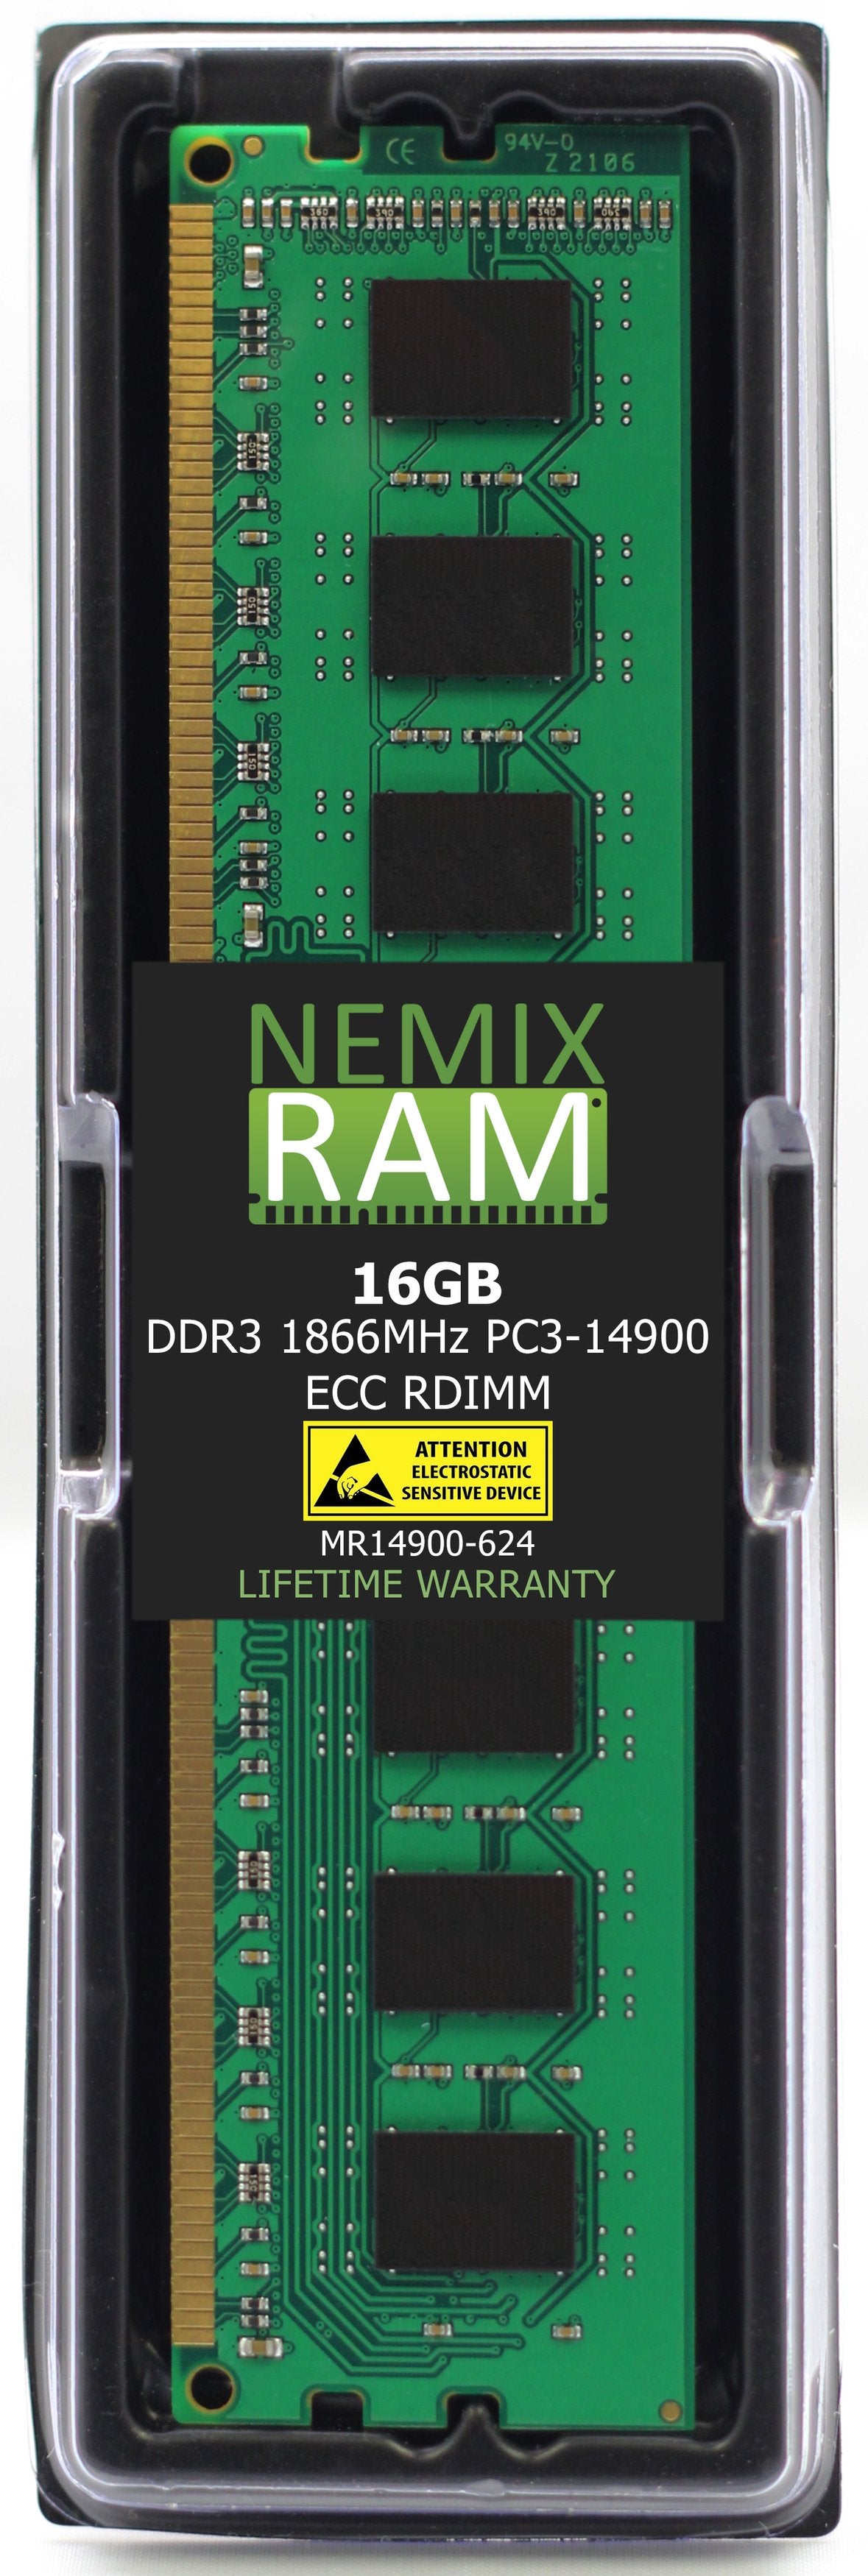 16GB DDR3 1866MHZ PC3-14900 RDIMM Compatible with SUPERMICRO MEM-DR316L-SL03-ER18